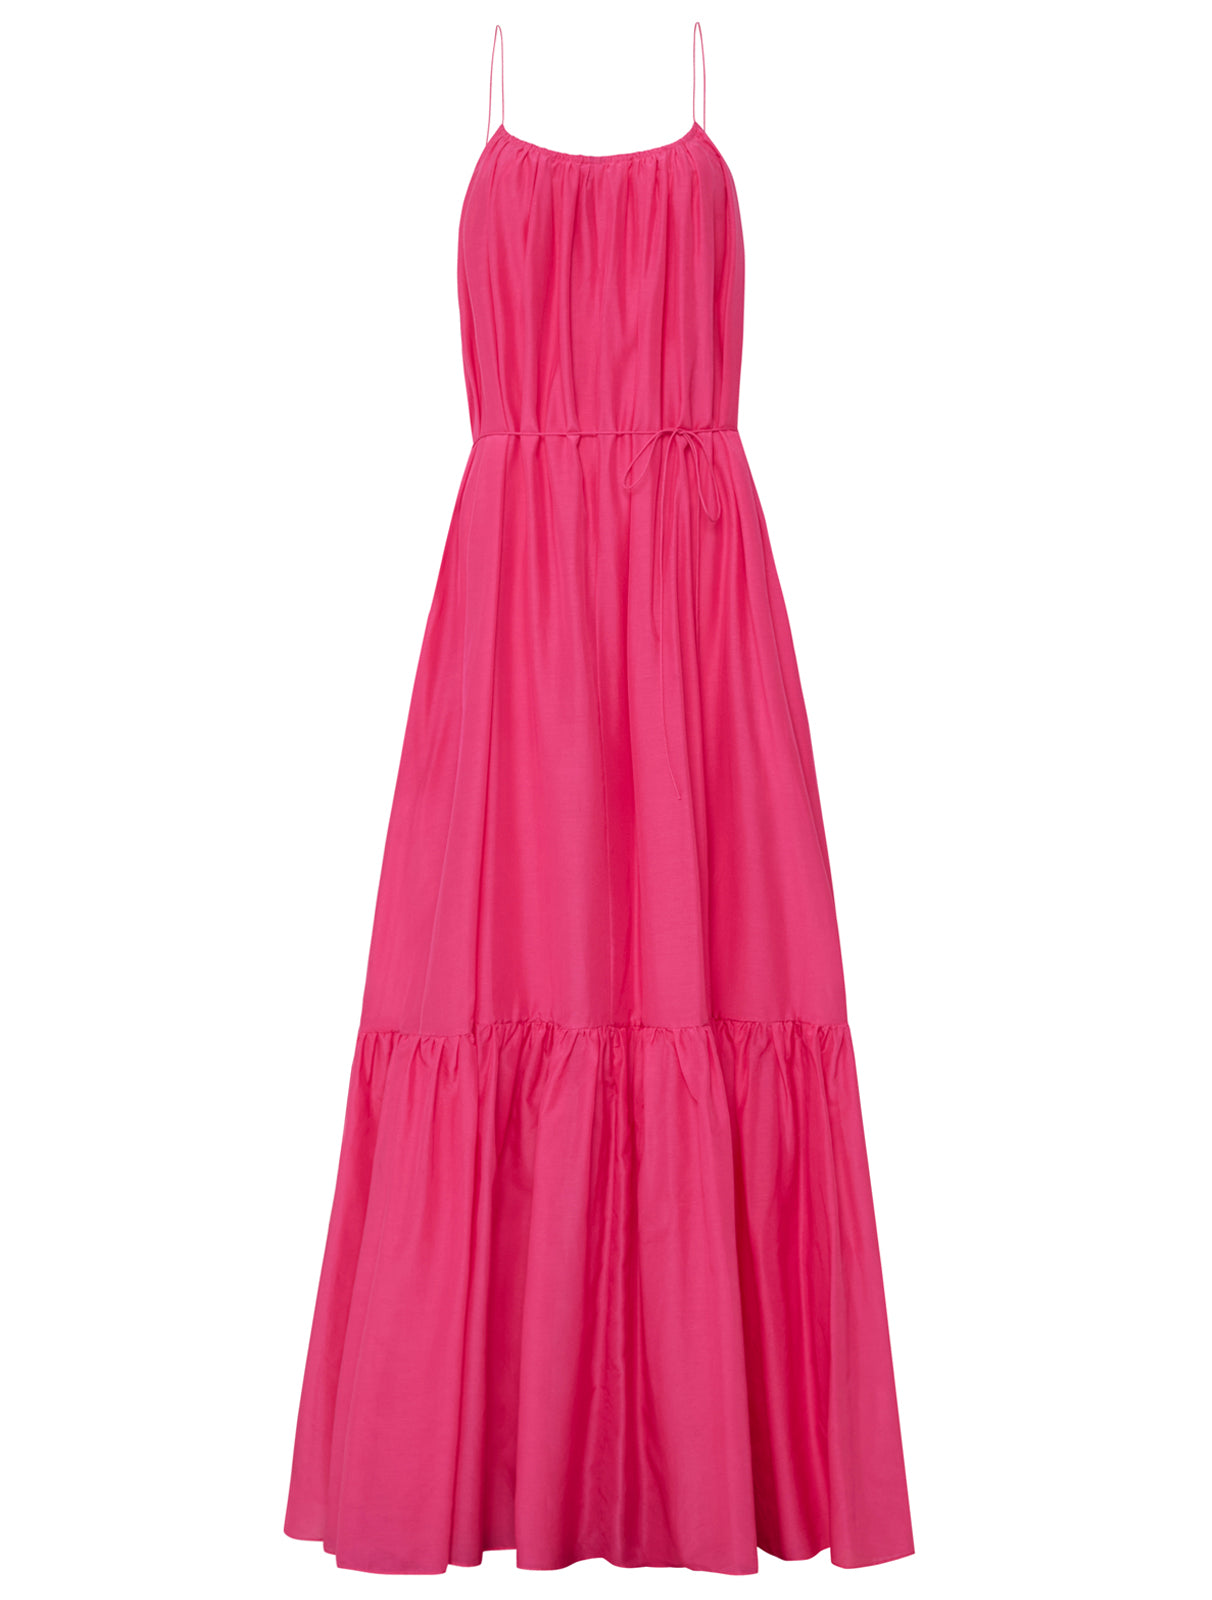 Matteau sherbert pink single layer gathered summer dress with tie